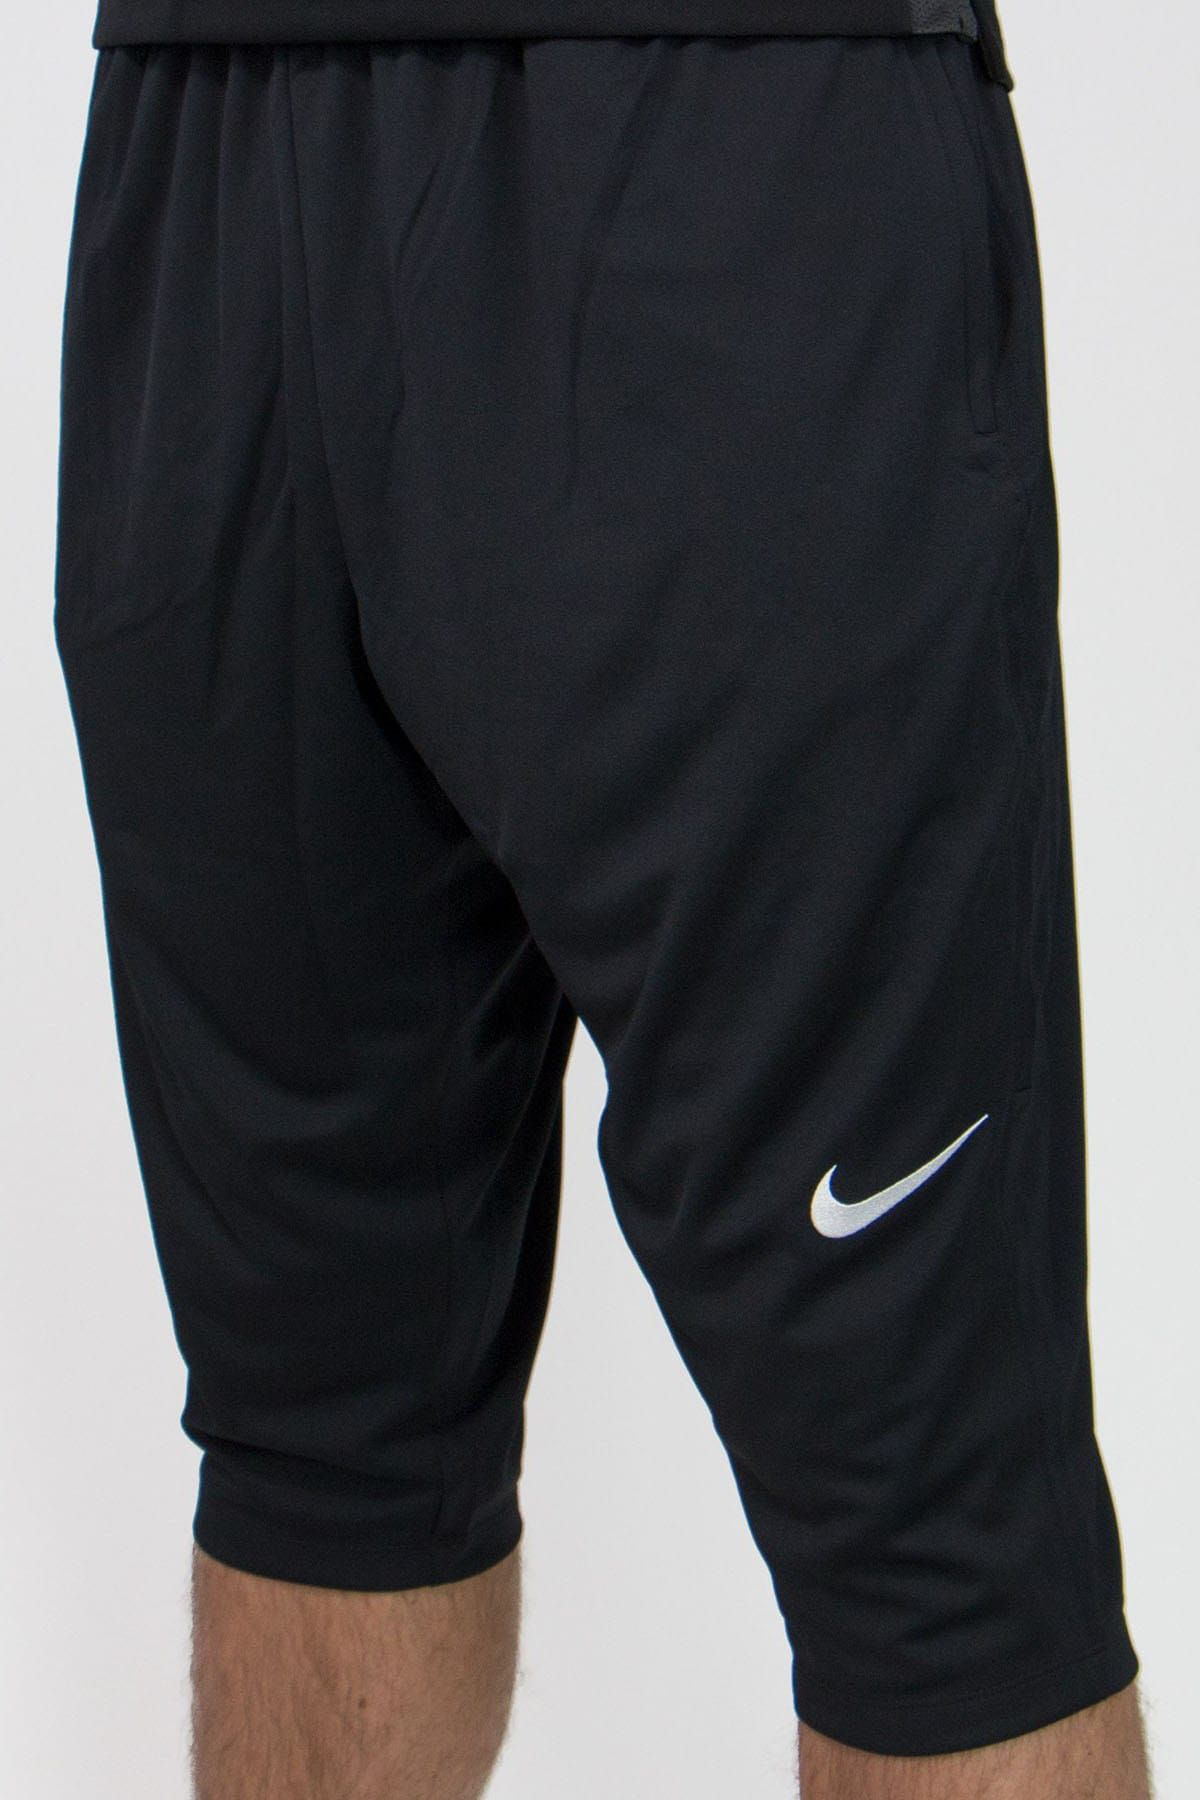 Nike Erkek Şort/Bermuda - M Nk Dry Acdmy18 3Qt Pant Kpz Kapri 893793-010 - 893793-010